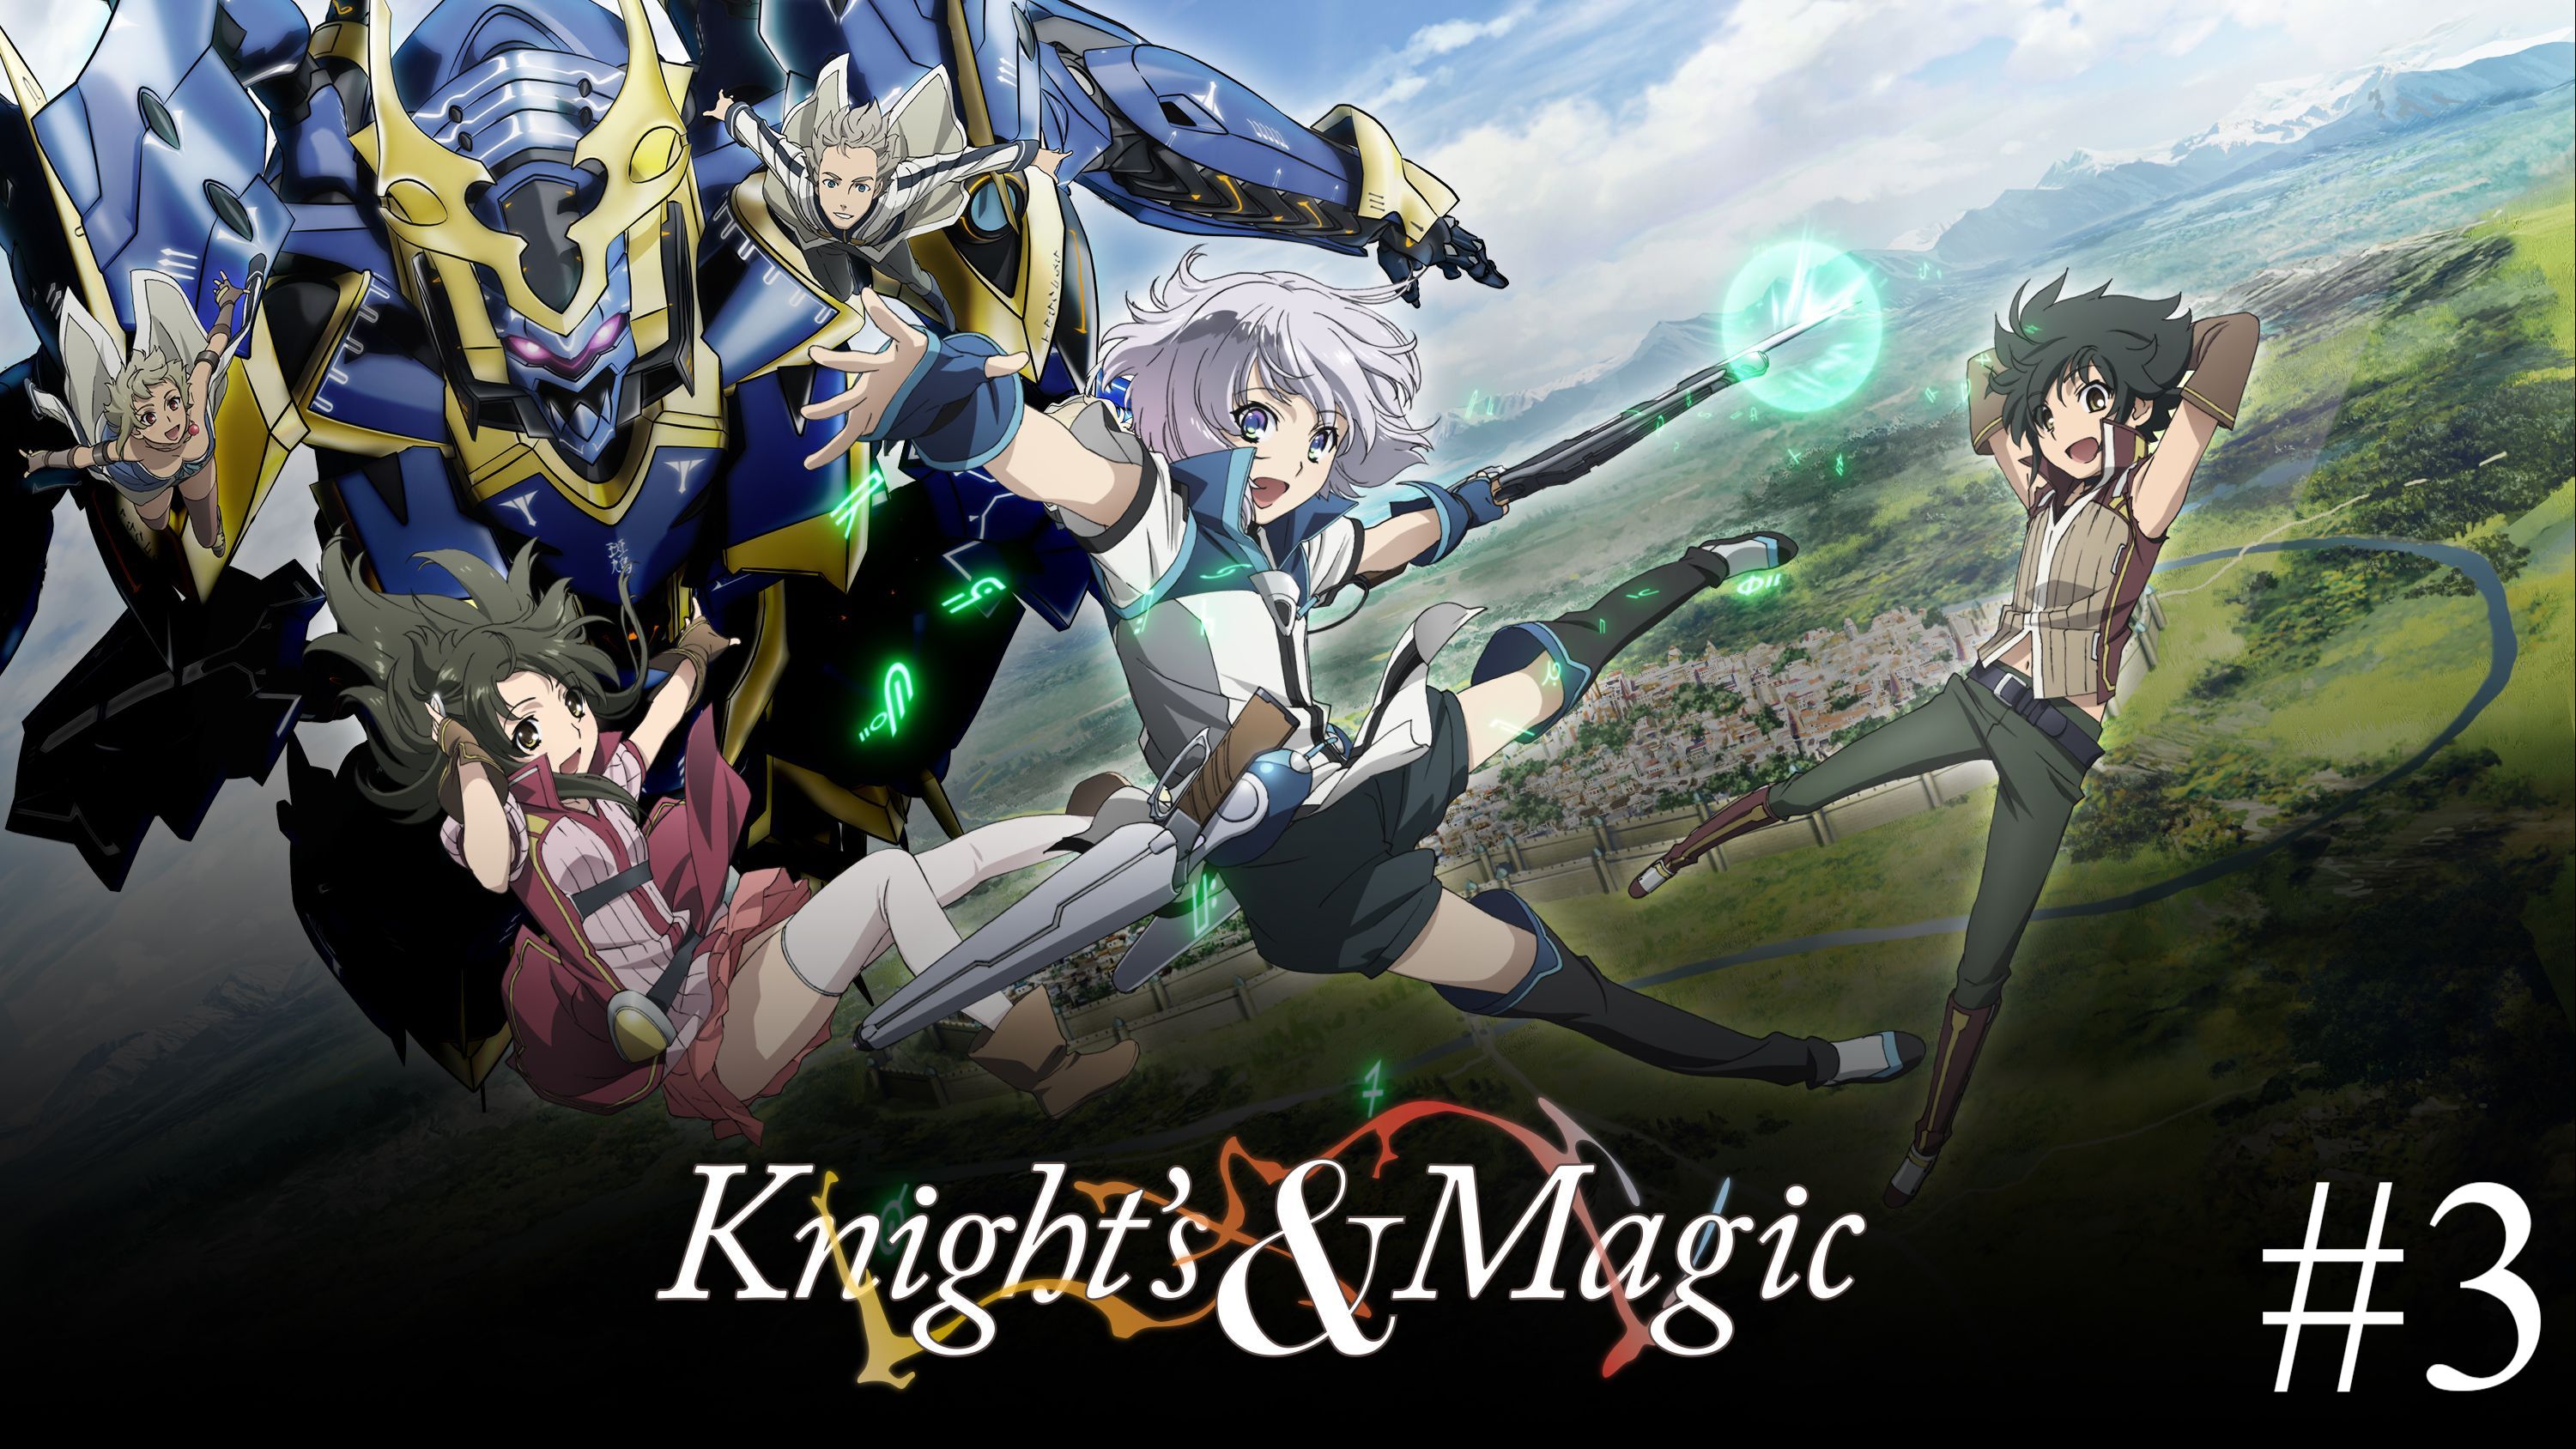 Knight's & Magic - Official Clip - Fight's & Magic 